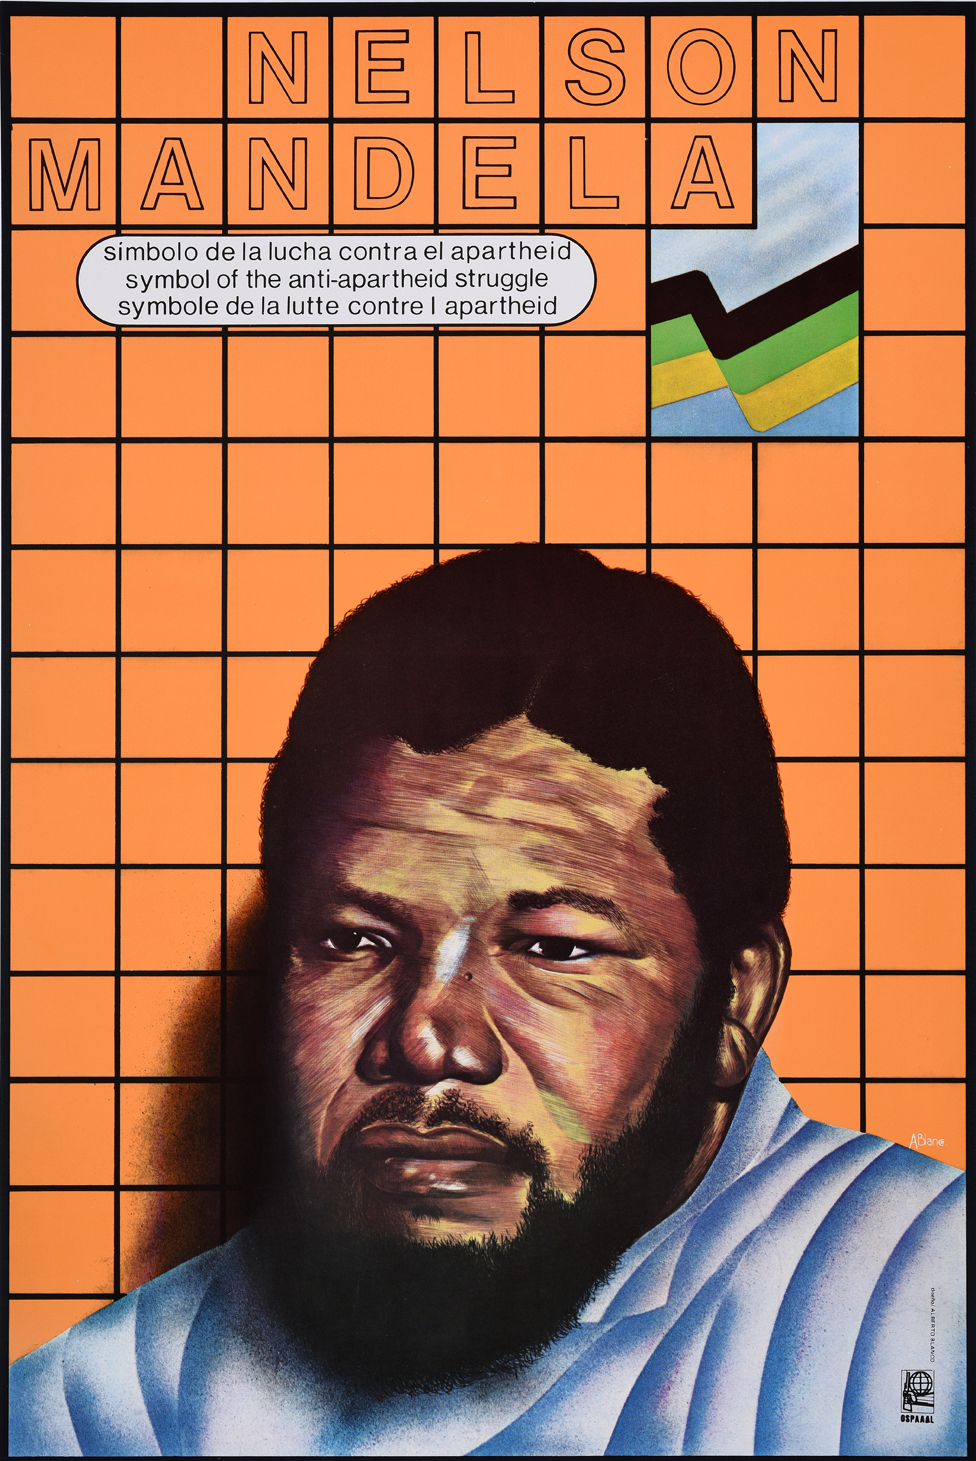 Плакат Ospaaal под названием «Нельсон Мандела, 1989 г.» со словами: «Символ борьбы против апартеида»